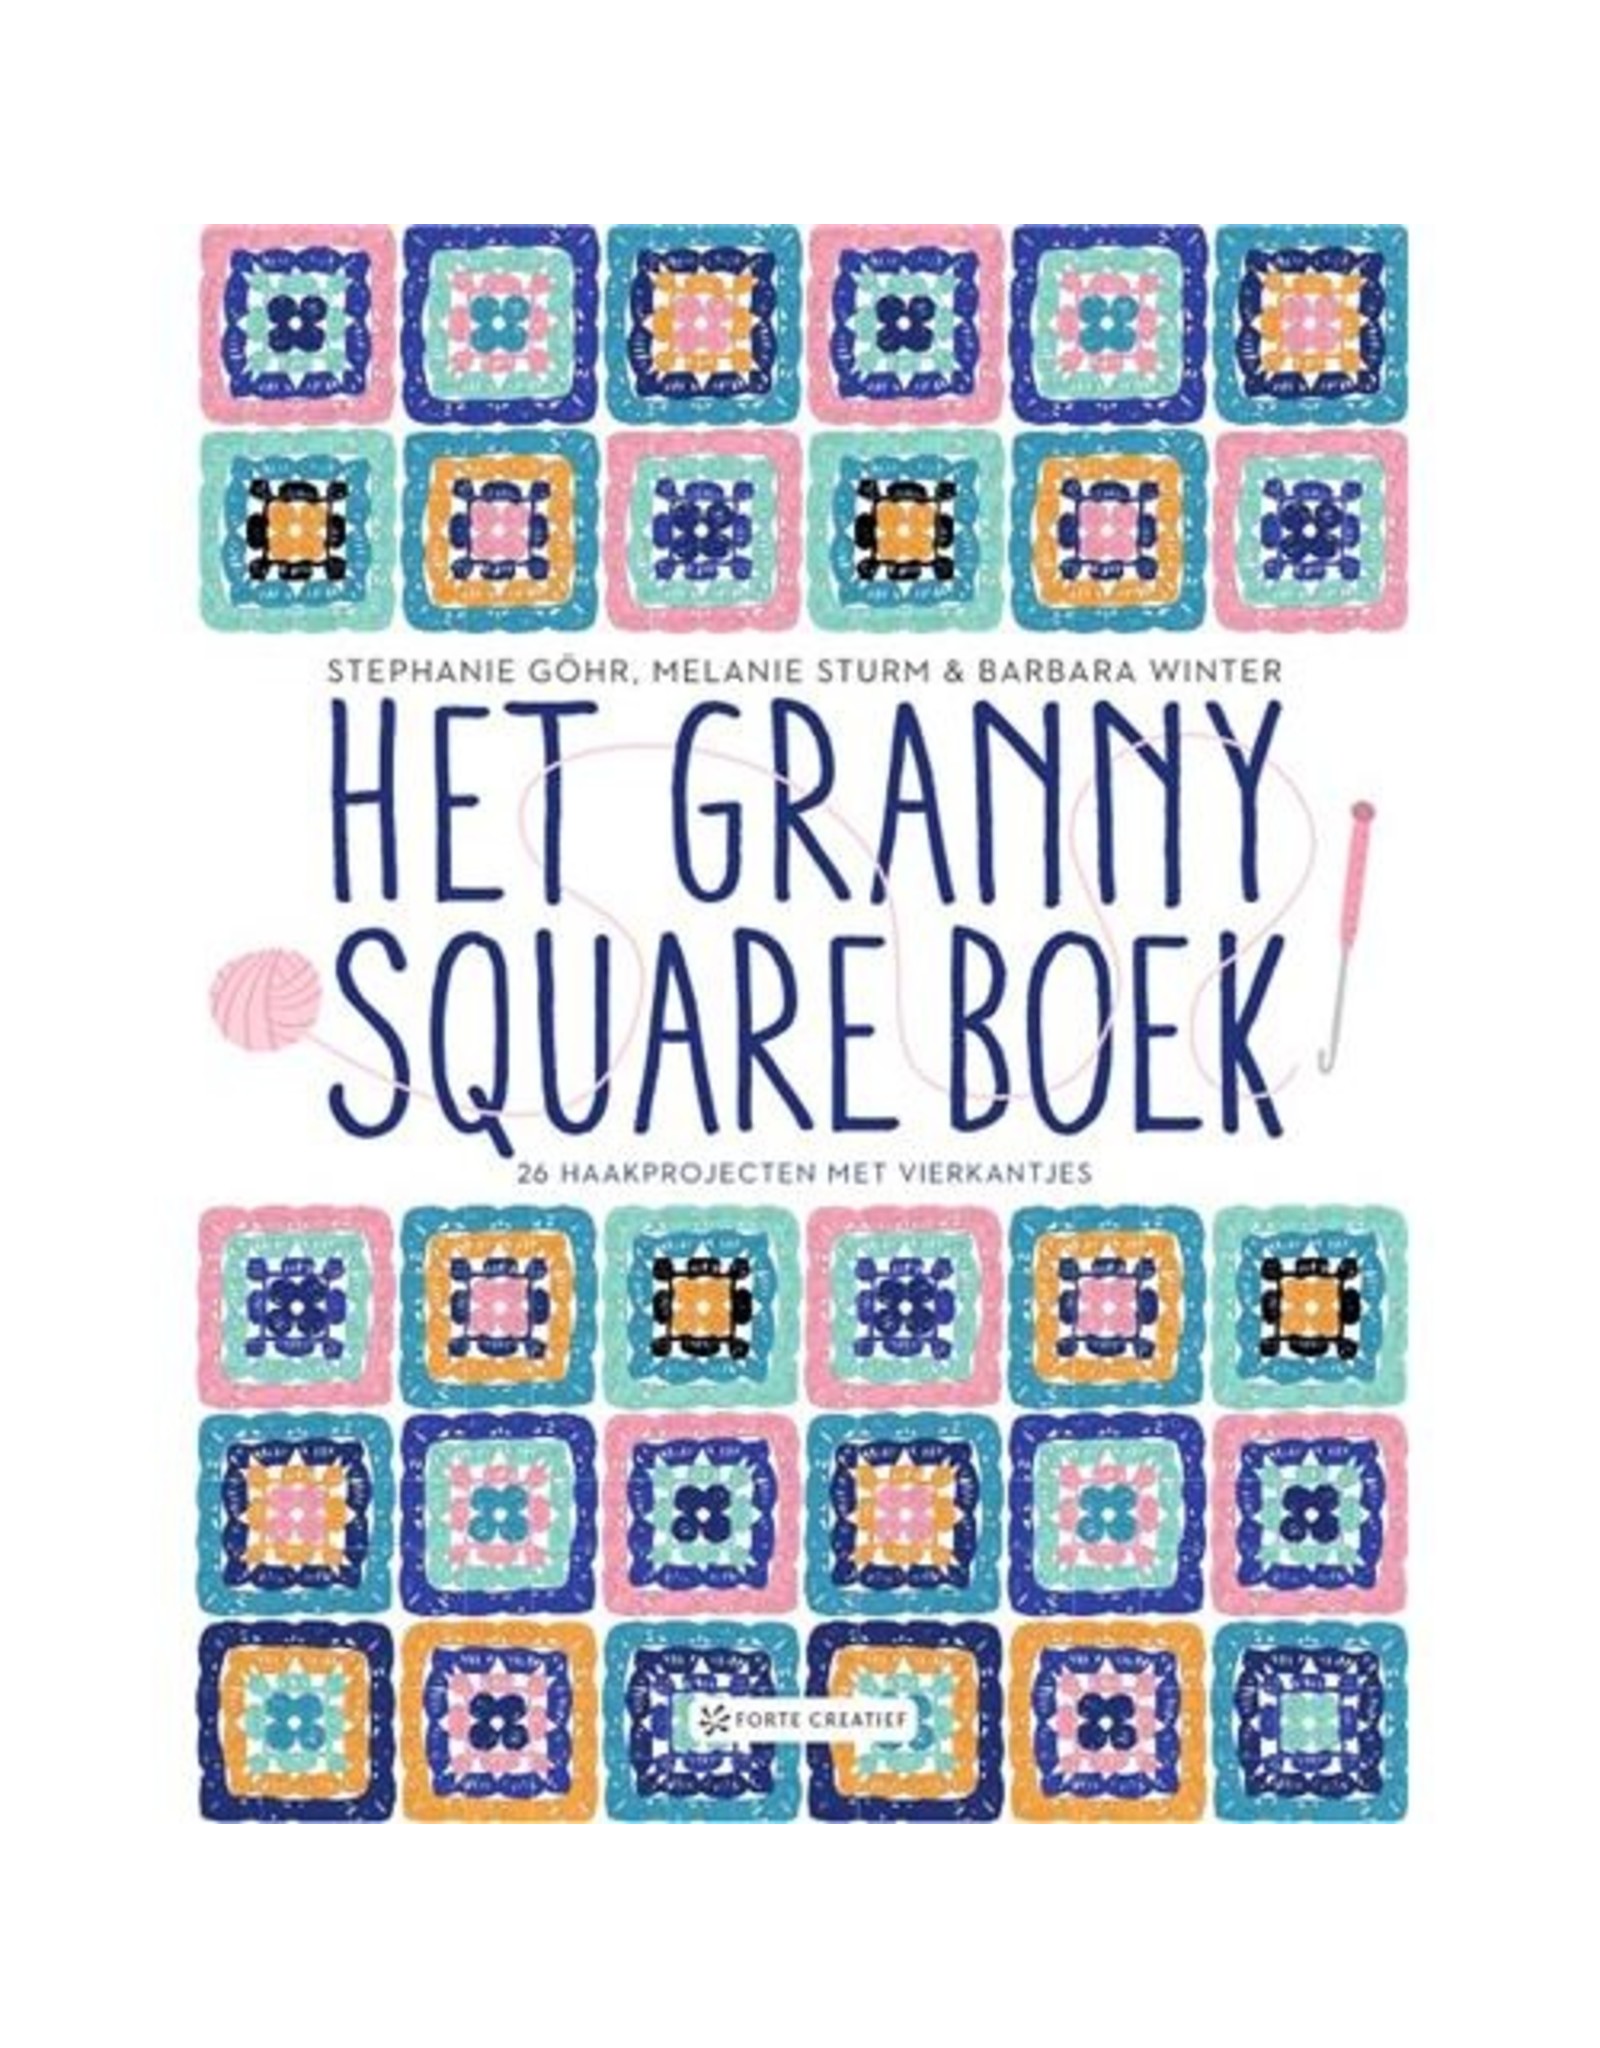 Het granny square boek - Stephanie Göhr, Melanie Sturm & Barbara Winter